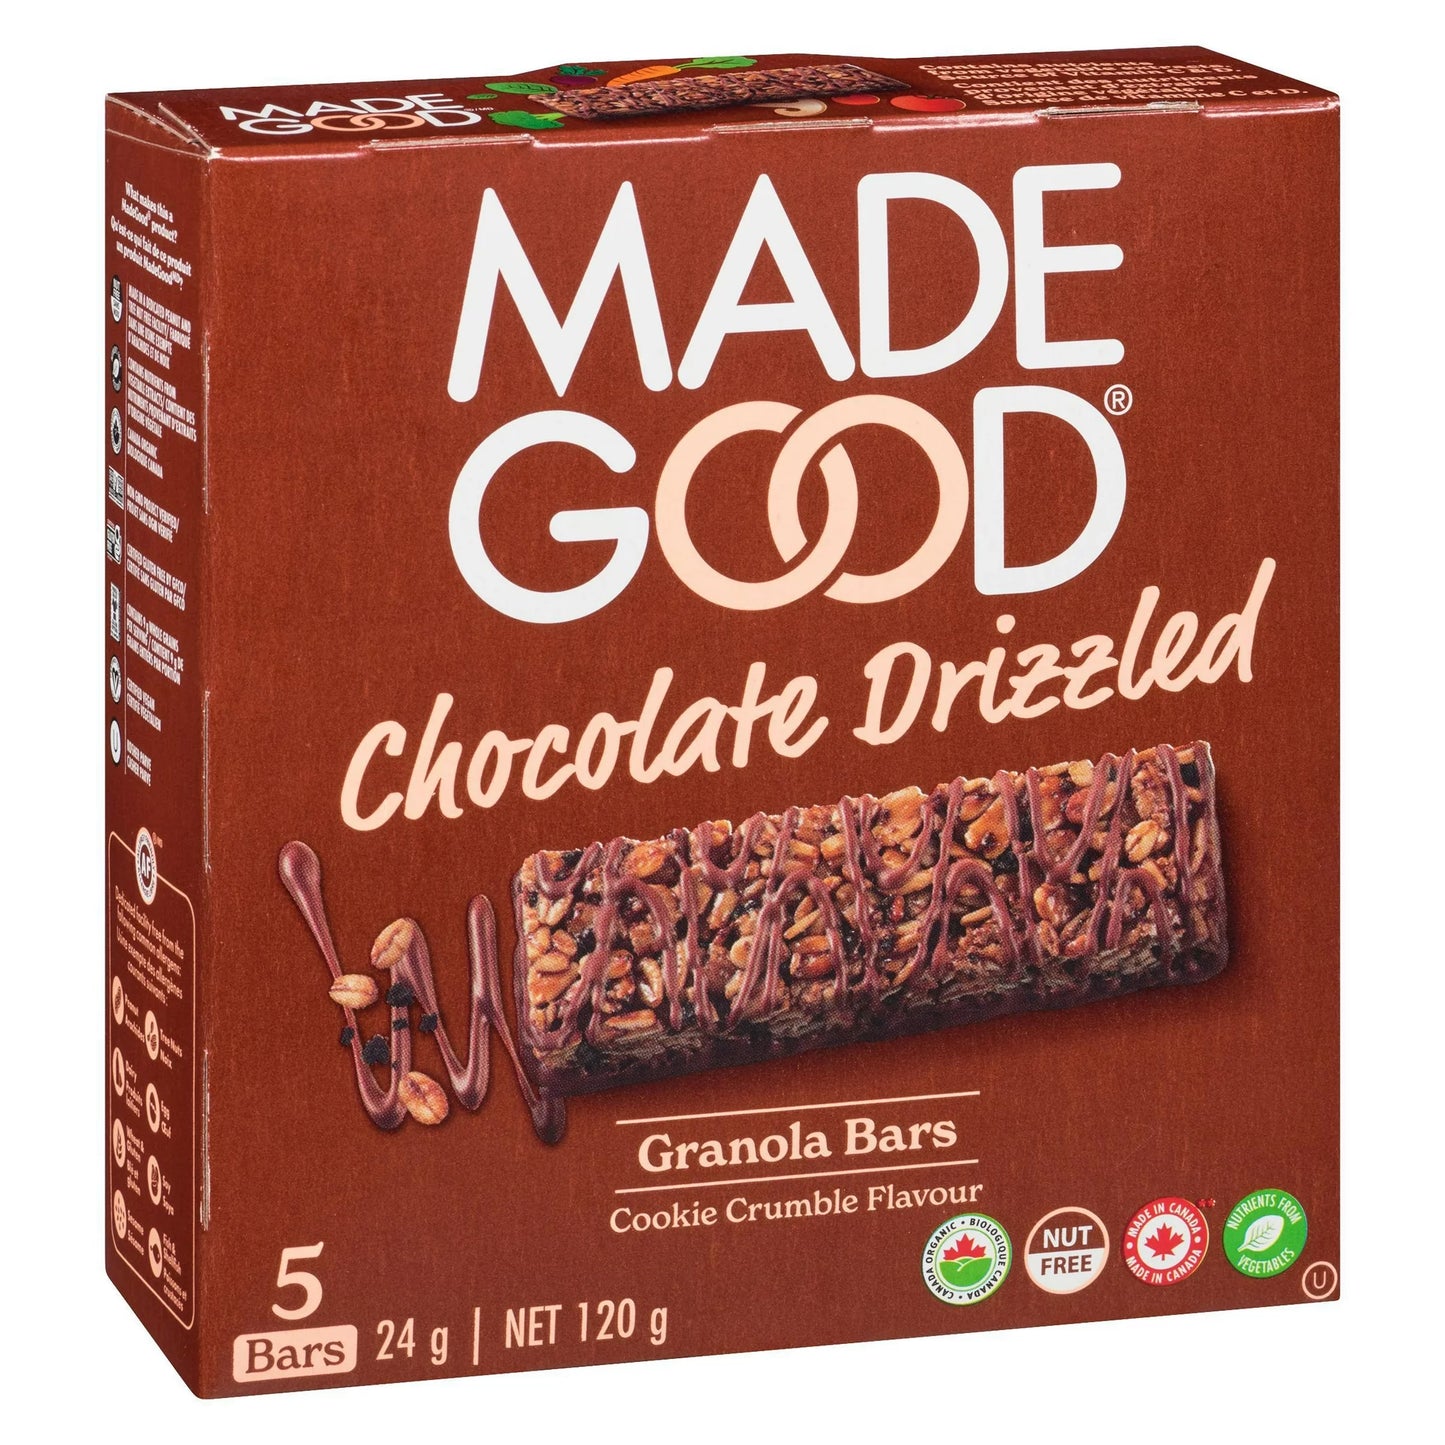 Made Good Granola Bars Chocolate Drizzled